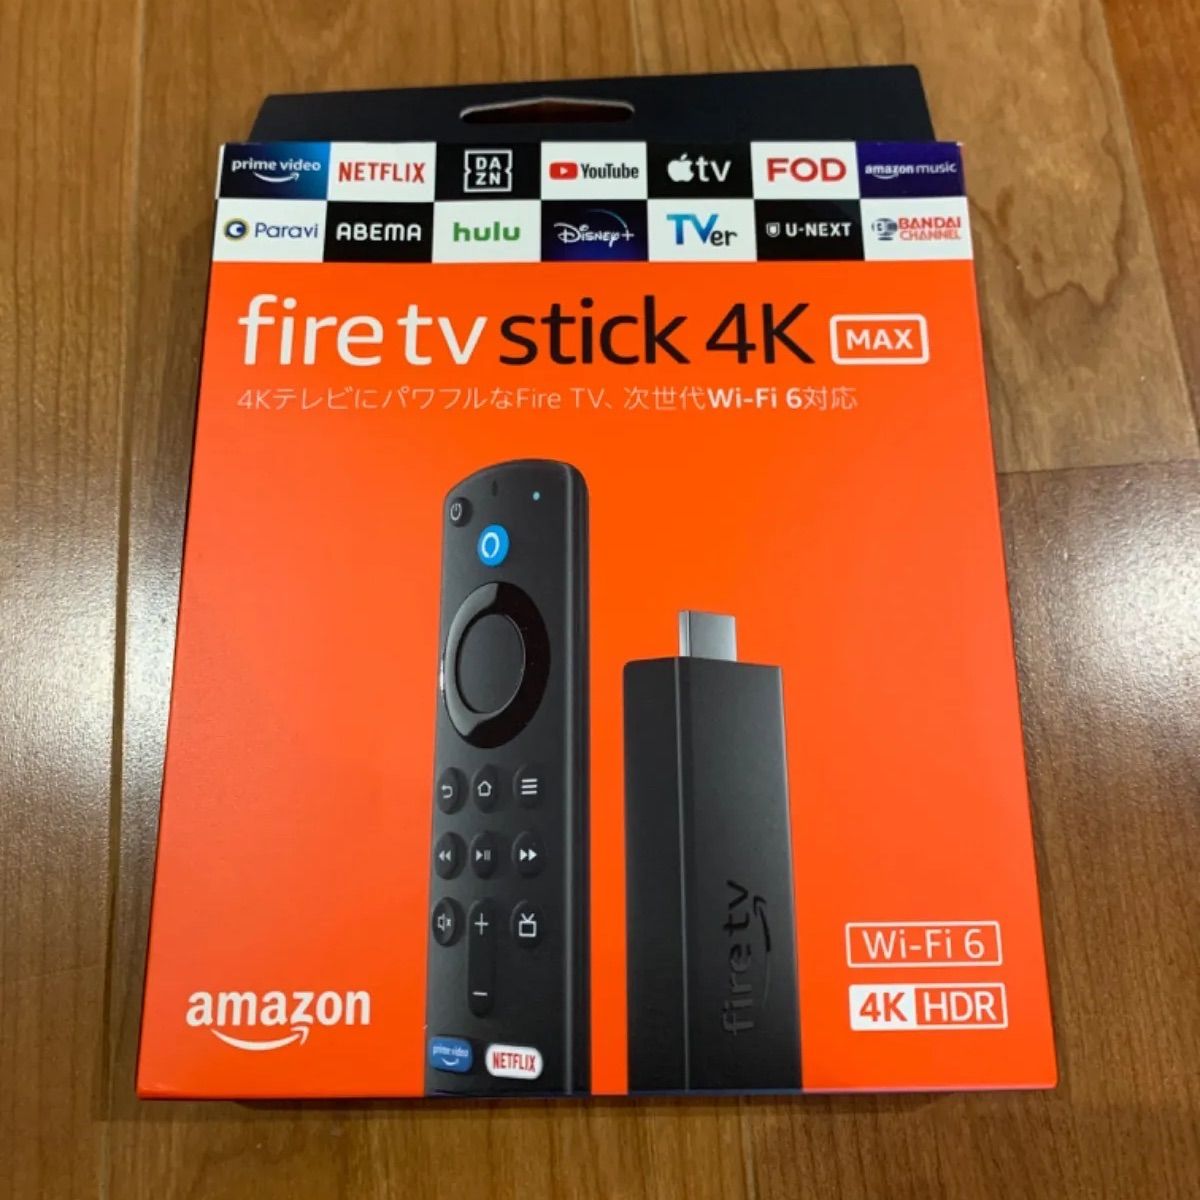 Fire TV Stick 4K リモコン無し - 映像機器